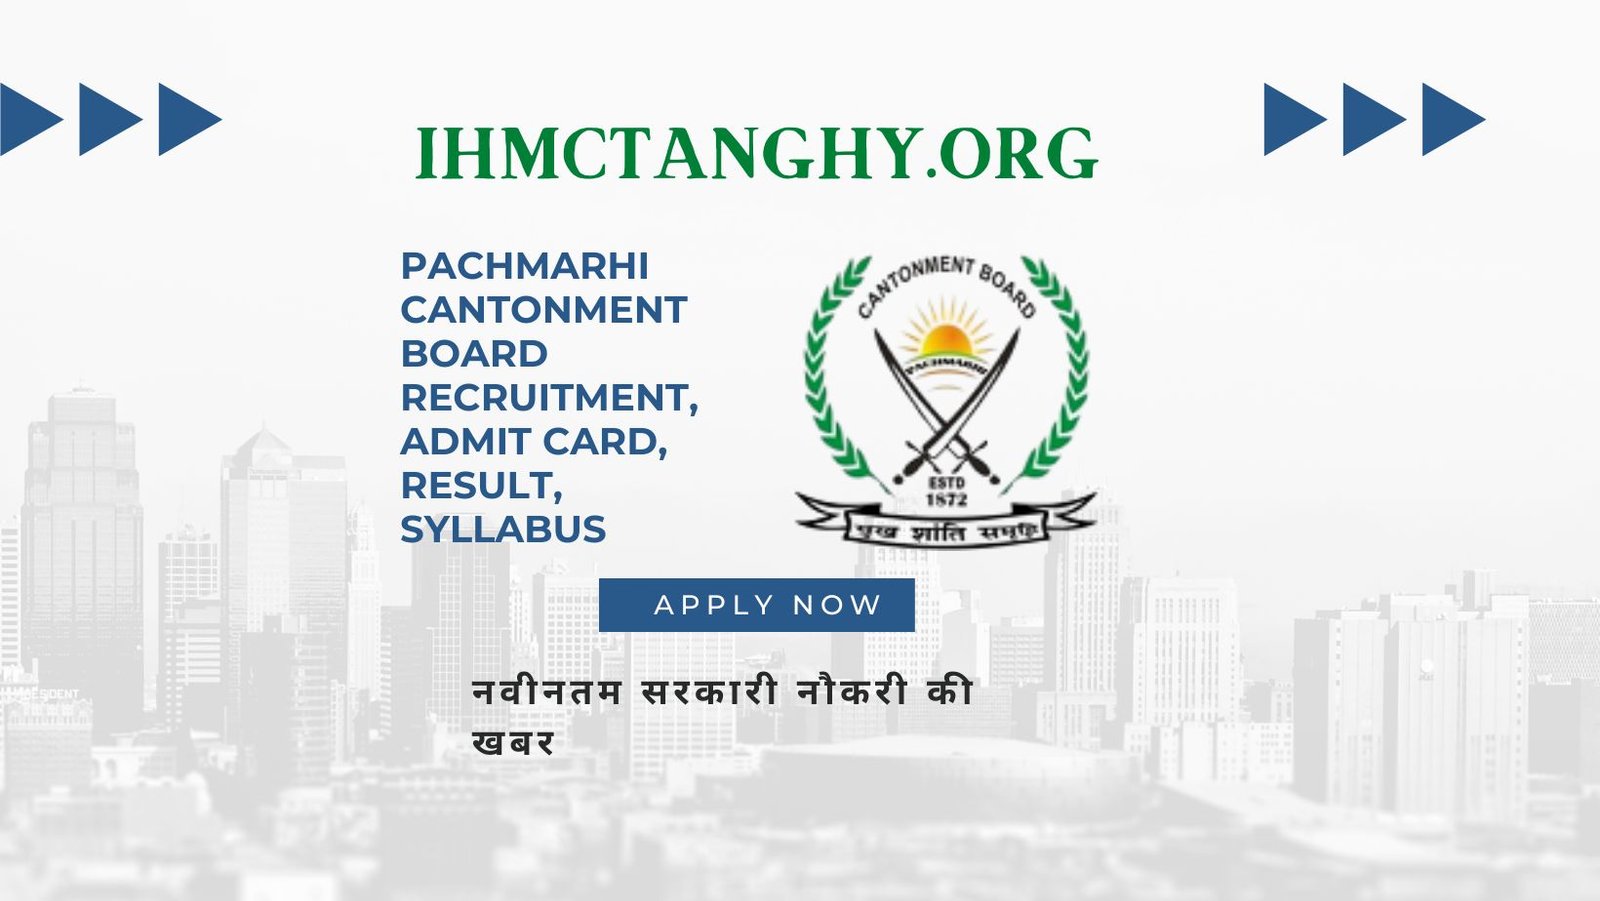 Pachmarhi Cantonment Board Recruitment